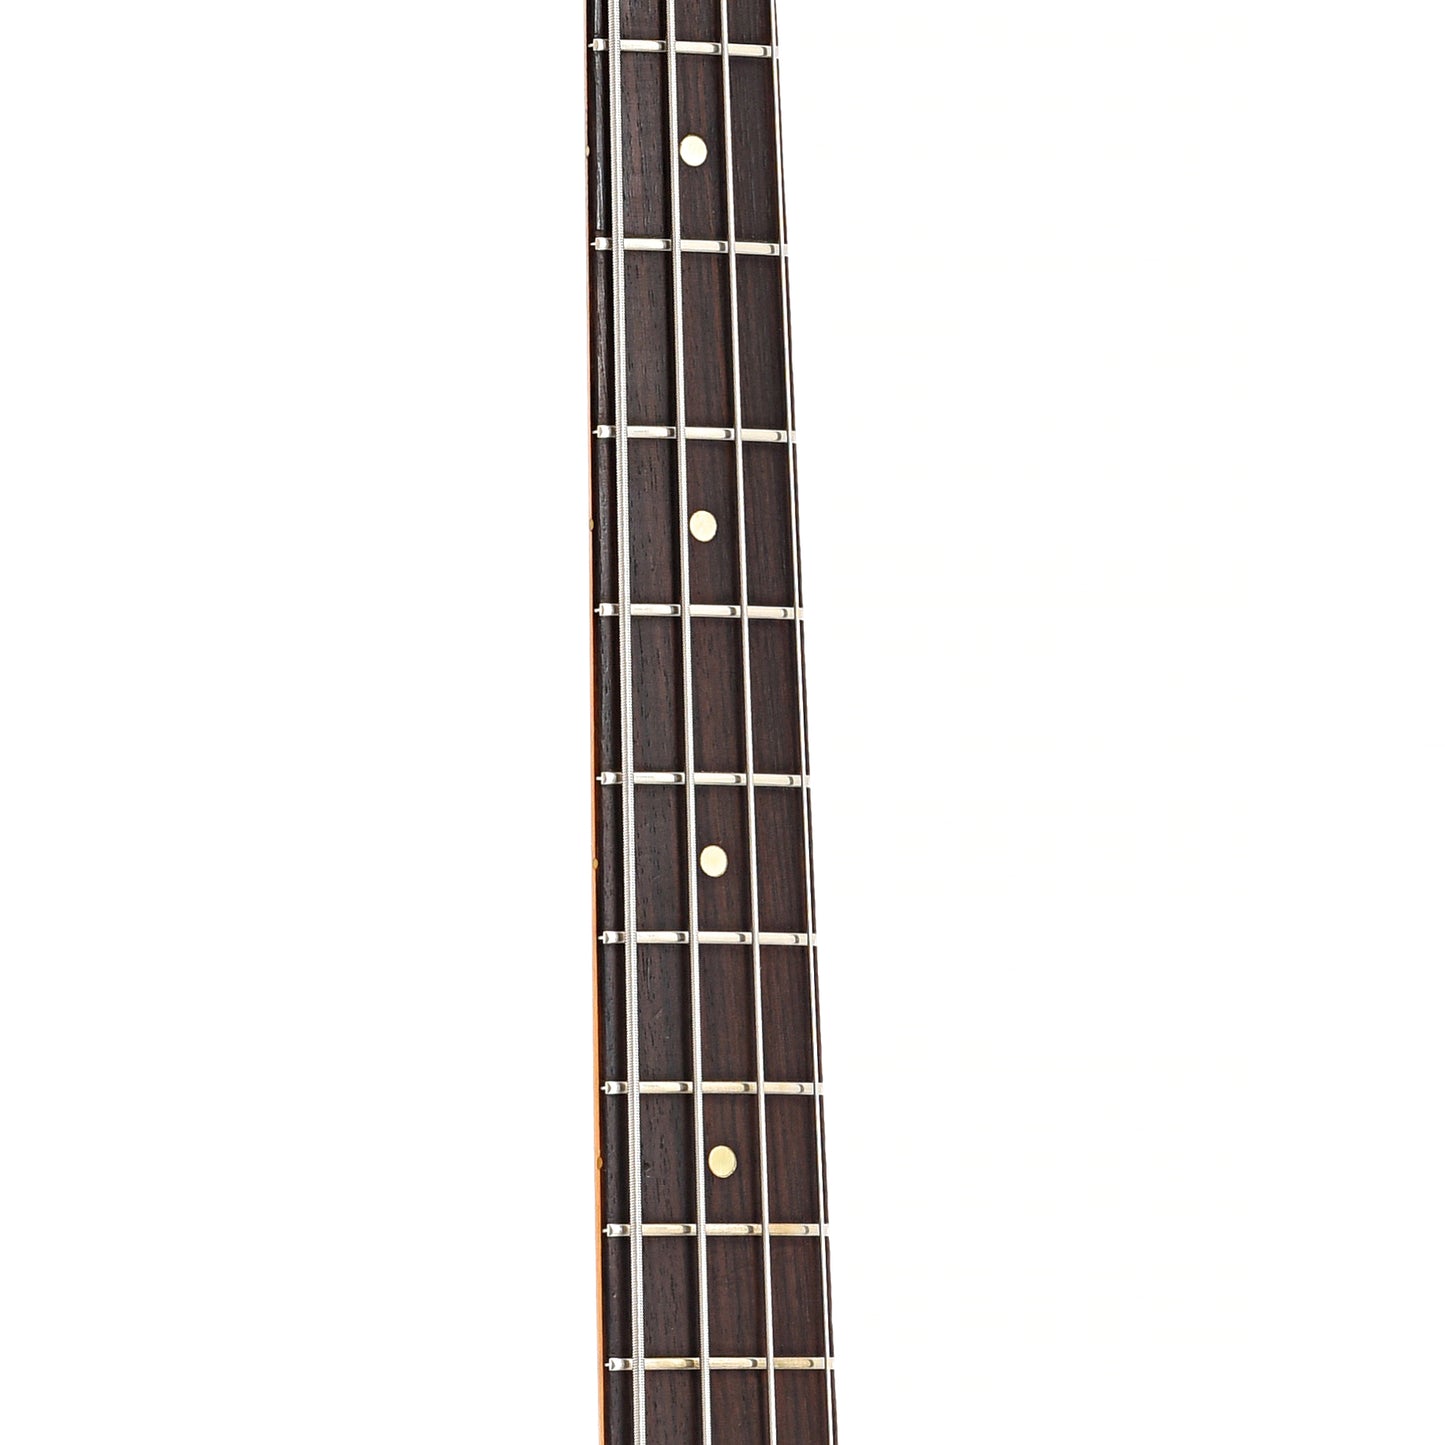 Fretboard of Fender Precision Electric Bass (1967)